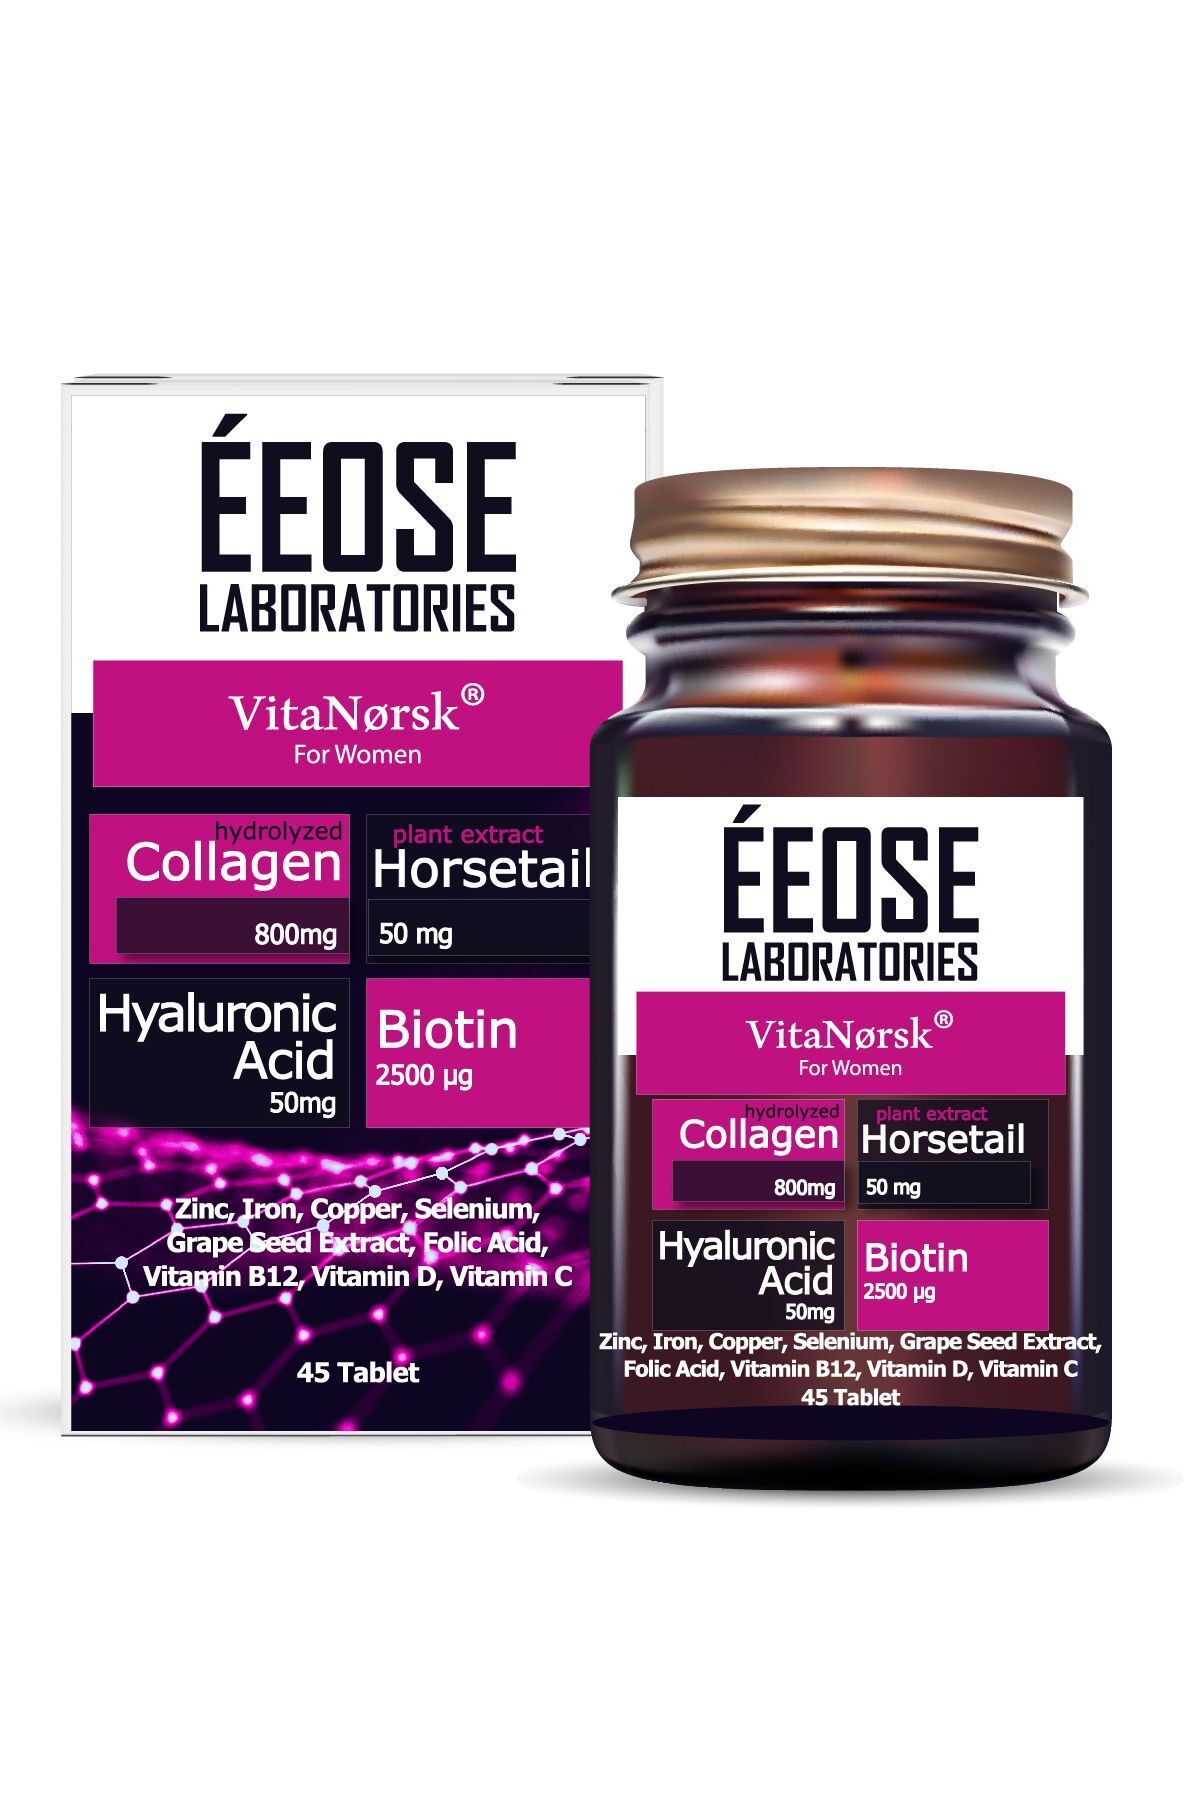 Eeose Collagen Tablet ( Kollajen + Hyaluronik Asit + Atkuyruğu + Biotin + C Vitamini) 45 Tablet